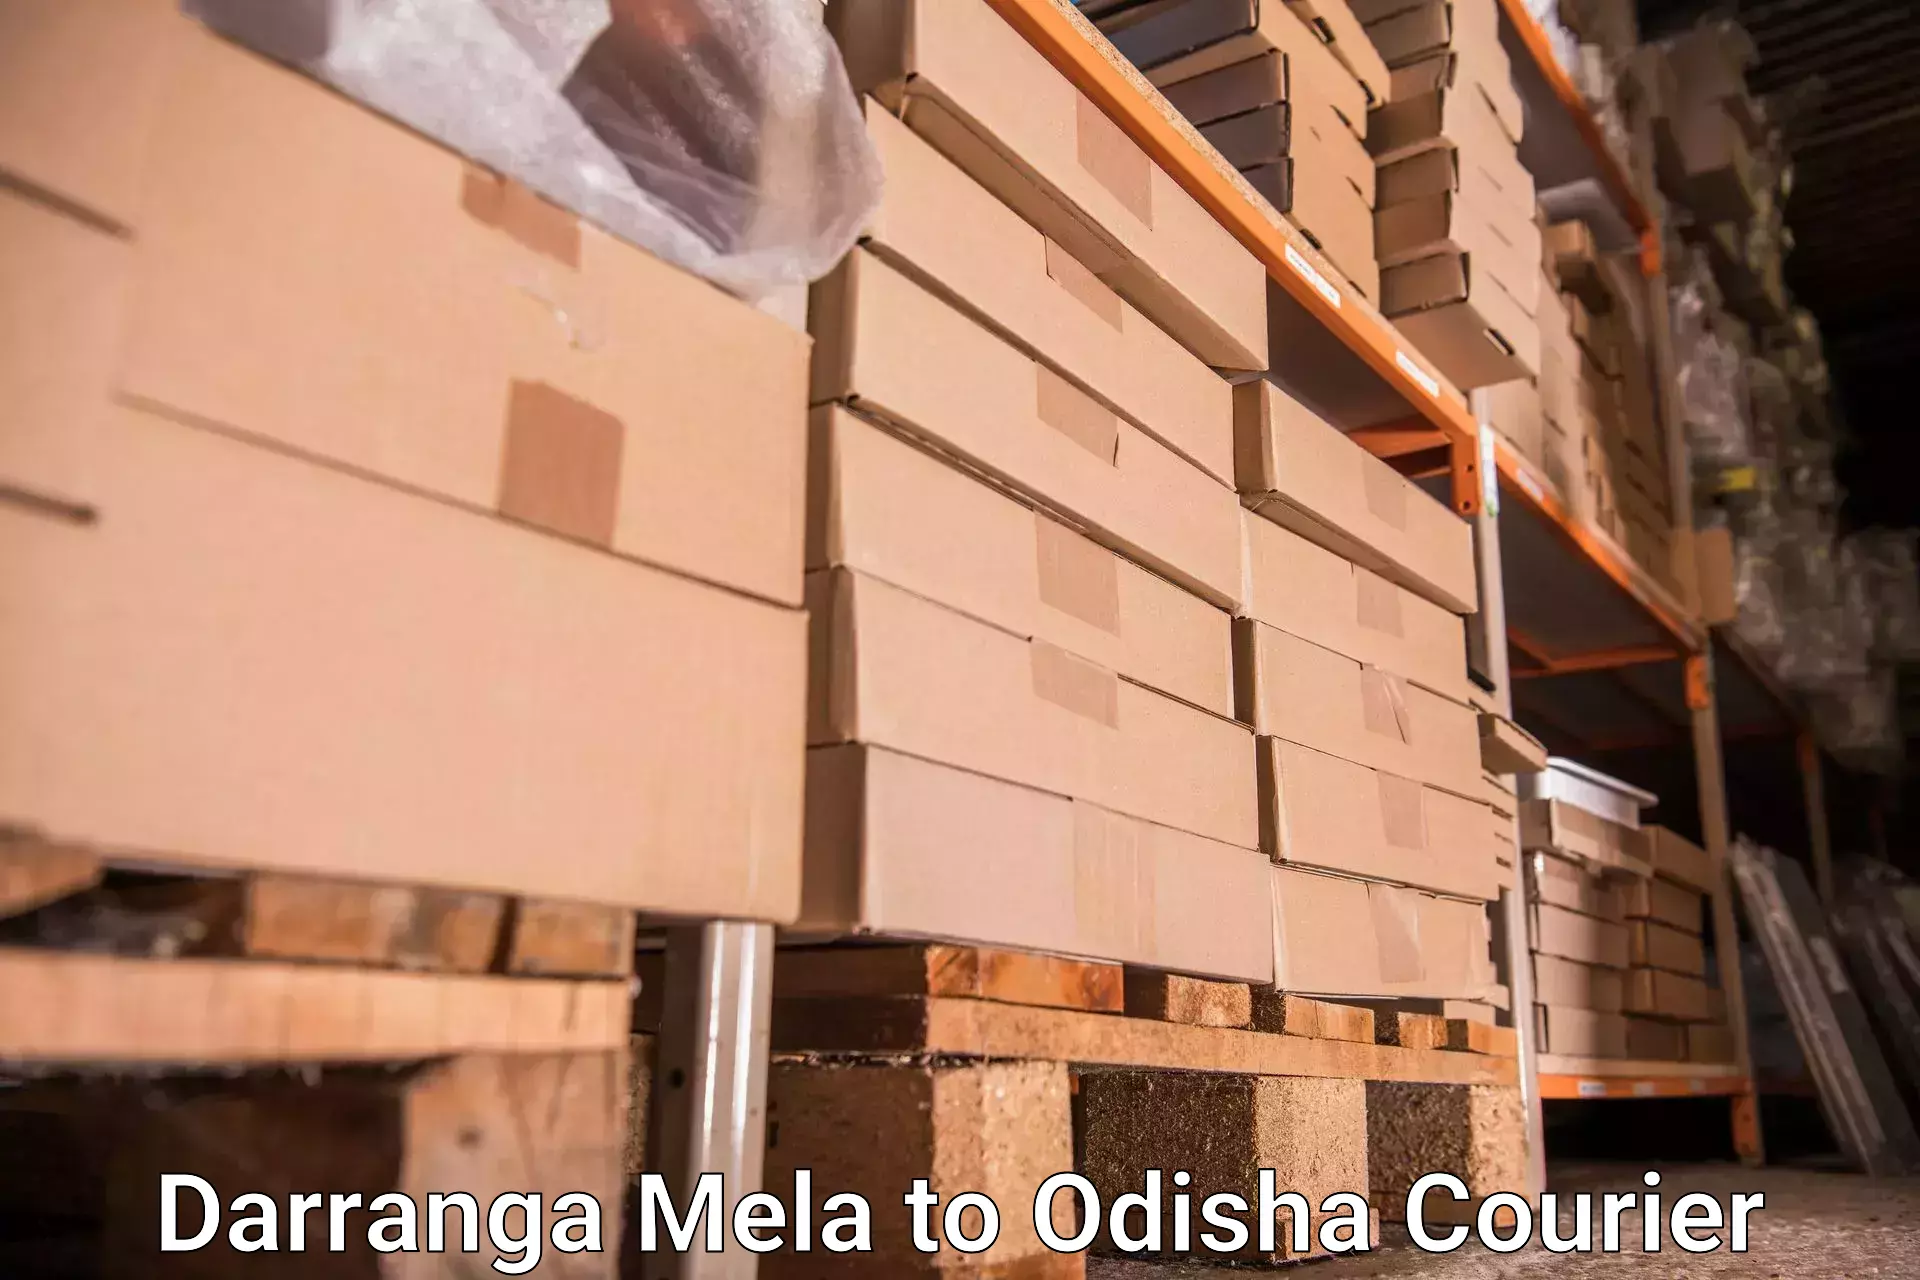 Baggage shipping experts Darranga Mela to Kamakhyanagar